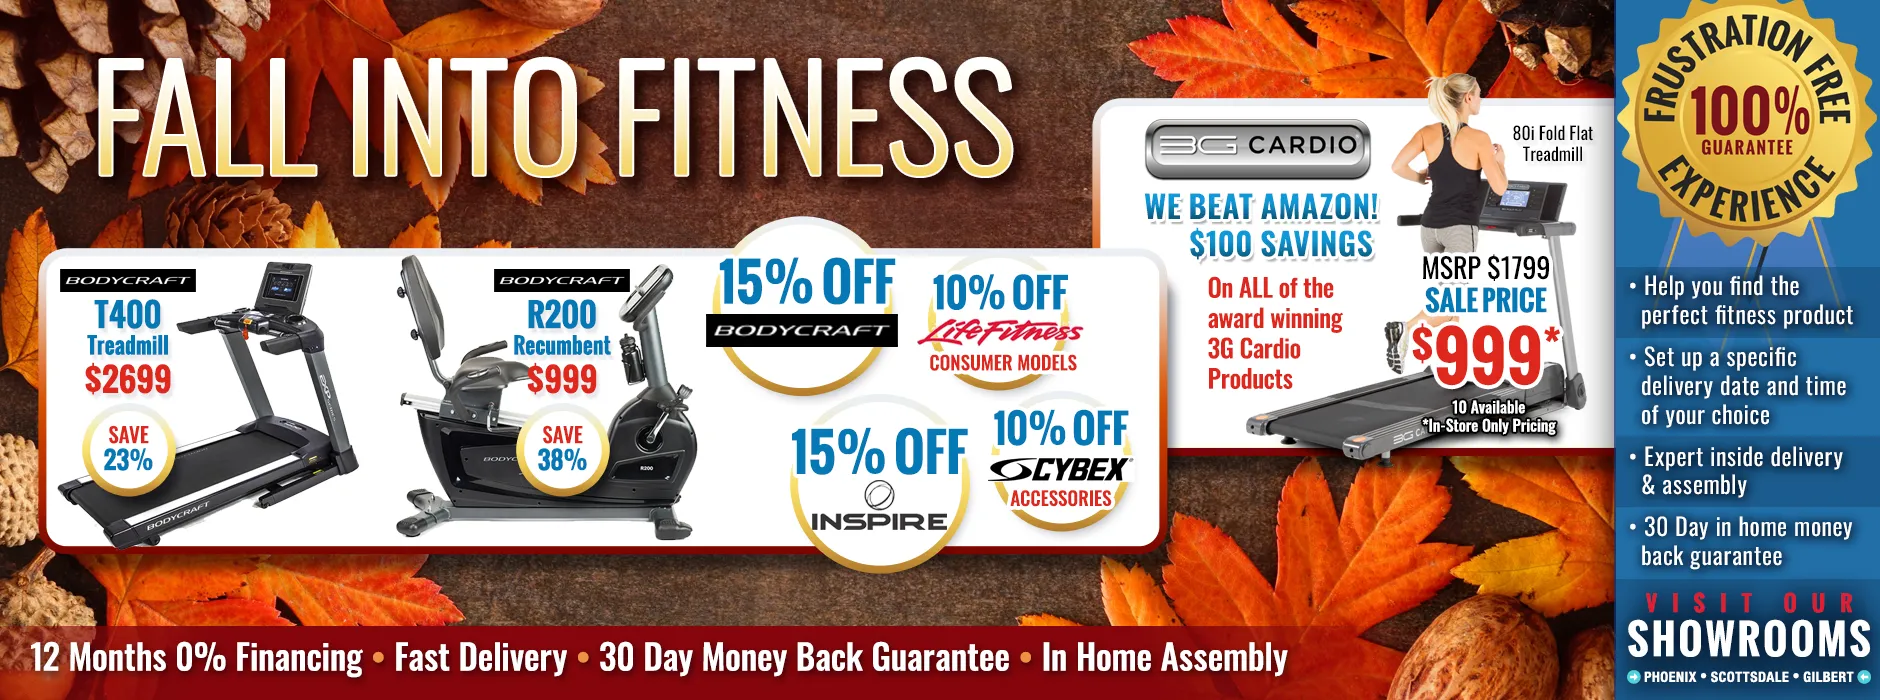 AtHomeFitness.com Fall into Fitness Sale on now